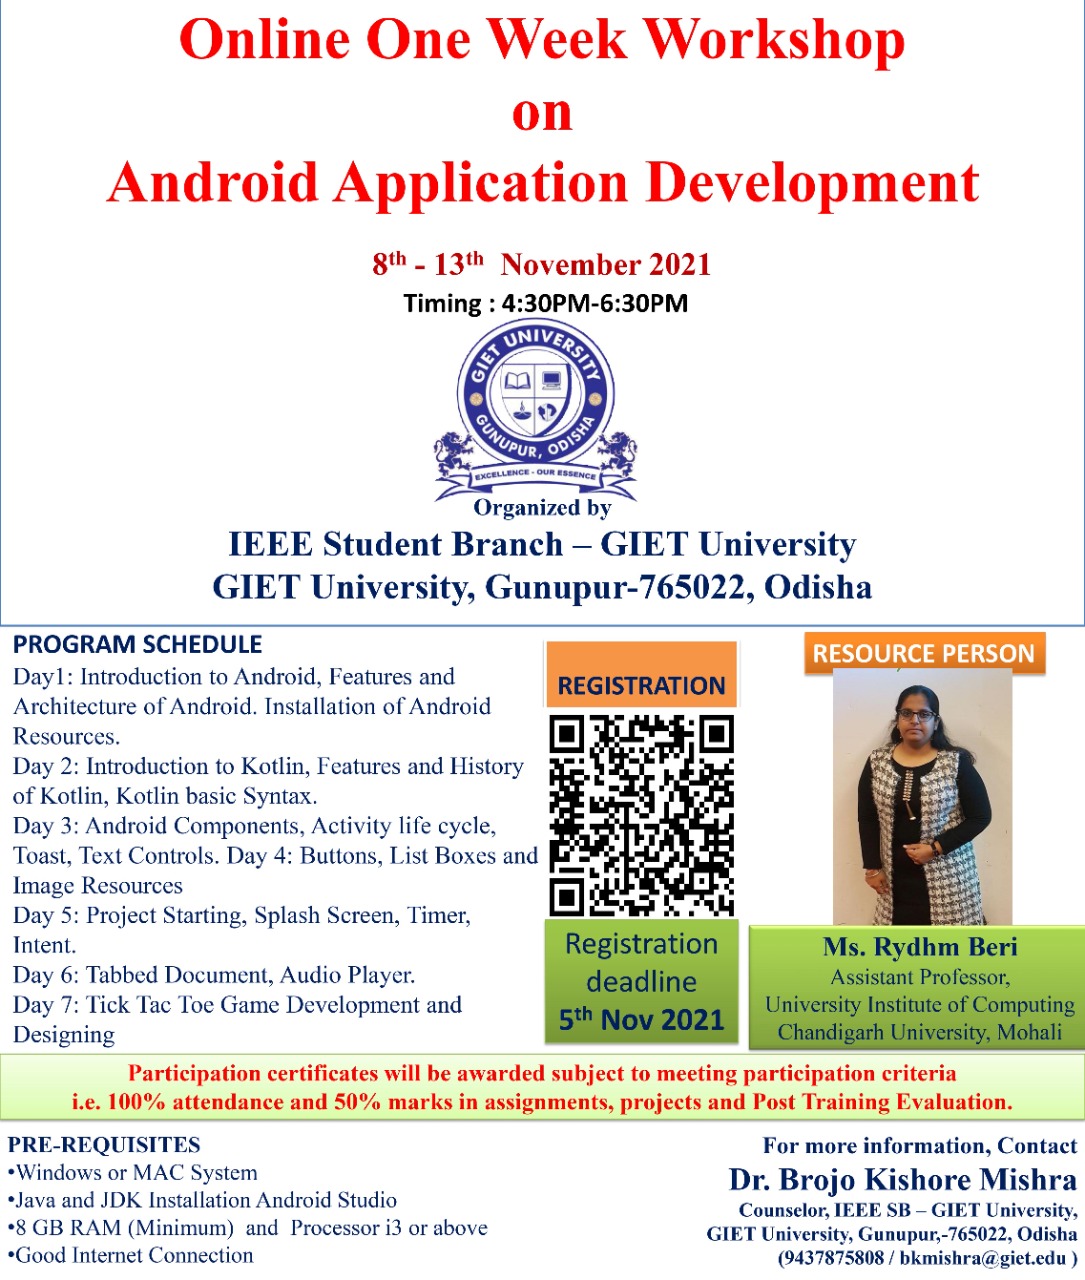 Online One Week Workshop on Android Application Development